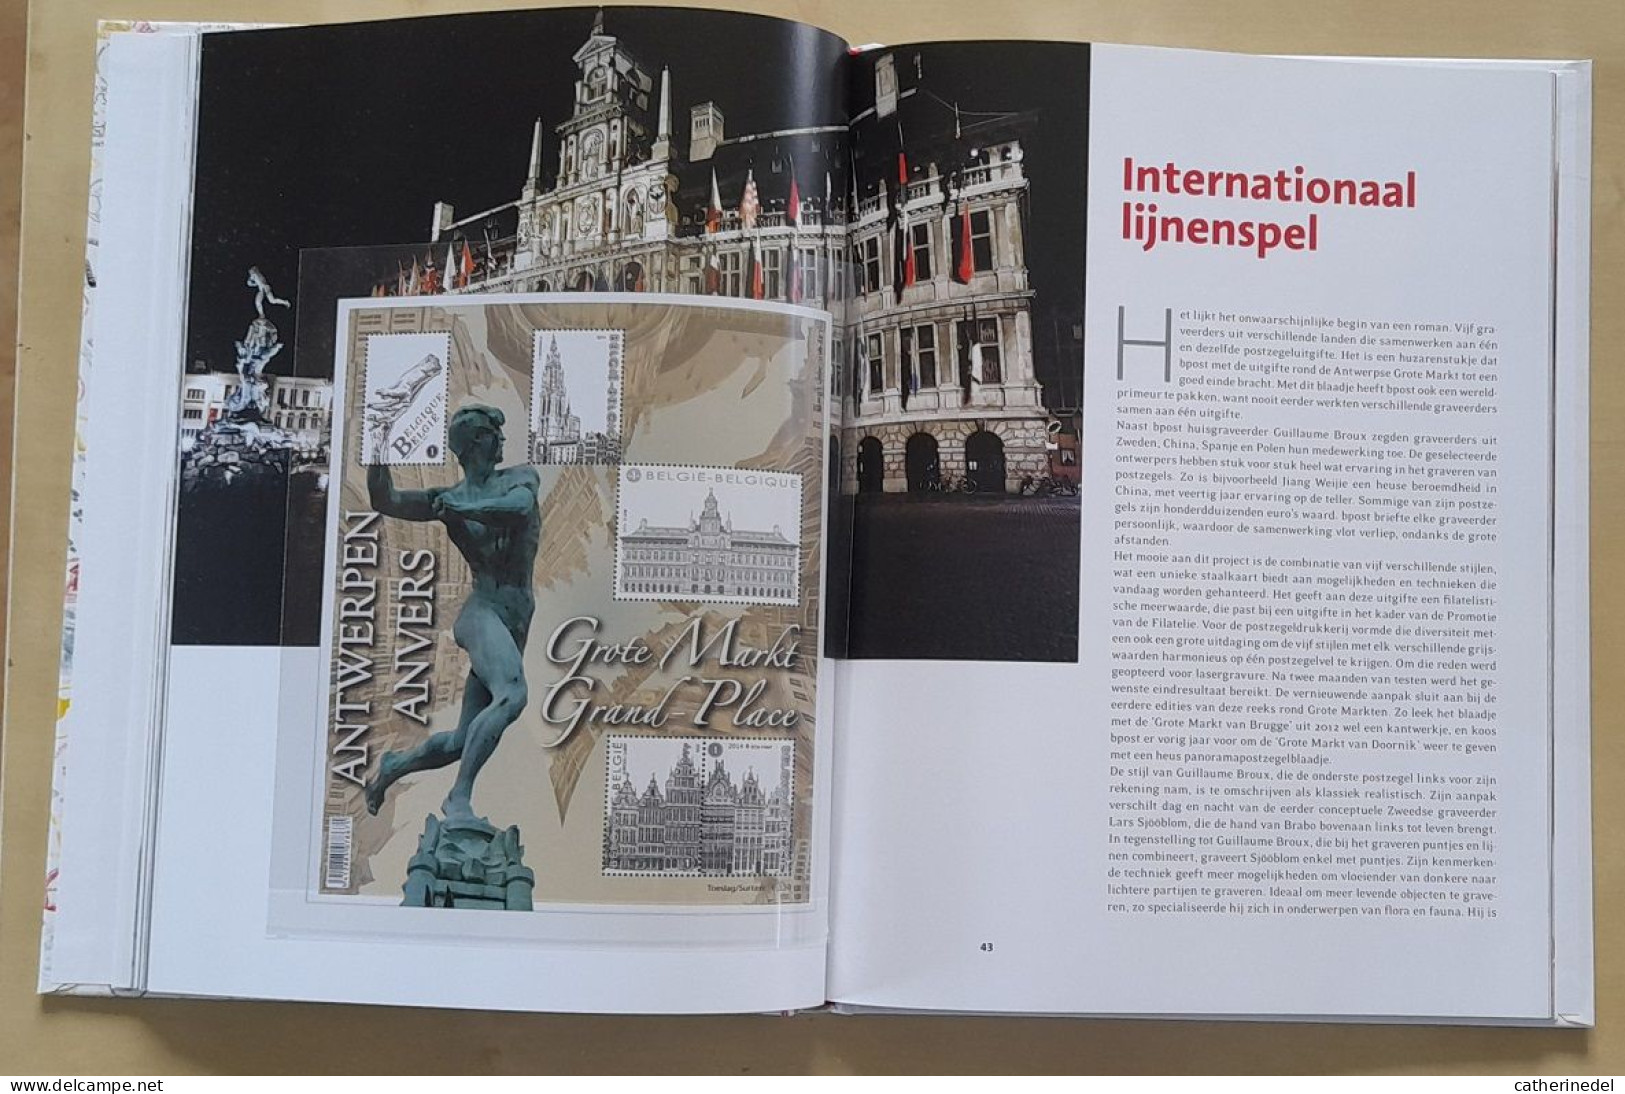 Année 2014 : Filatelieboek "Belgische Postzegels Vertellen 2014" (sans Timbre) - Collections